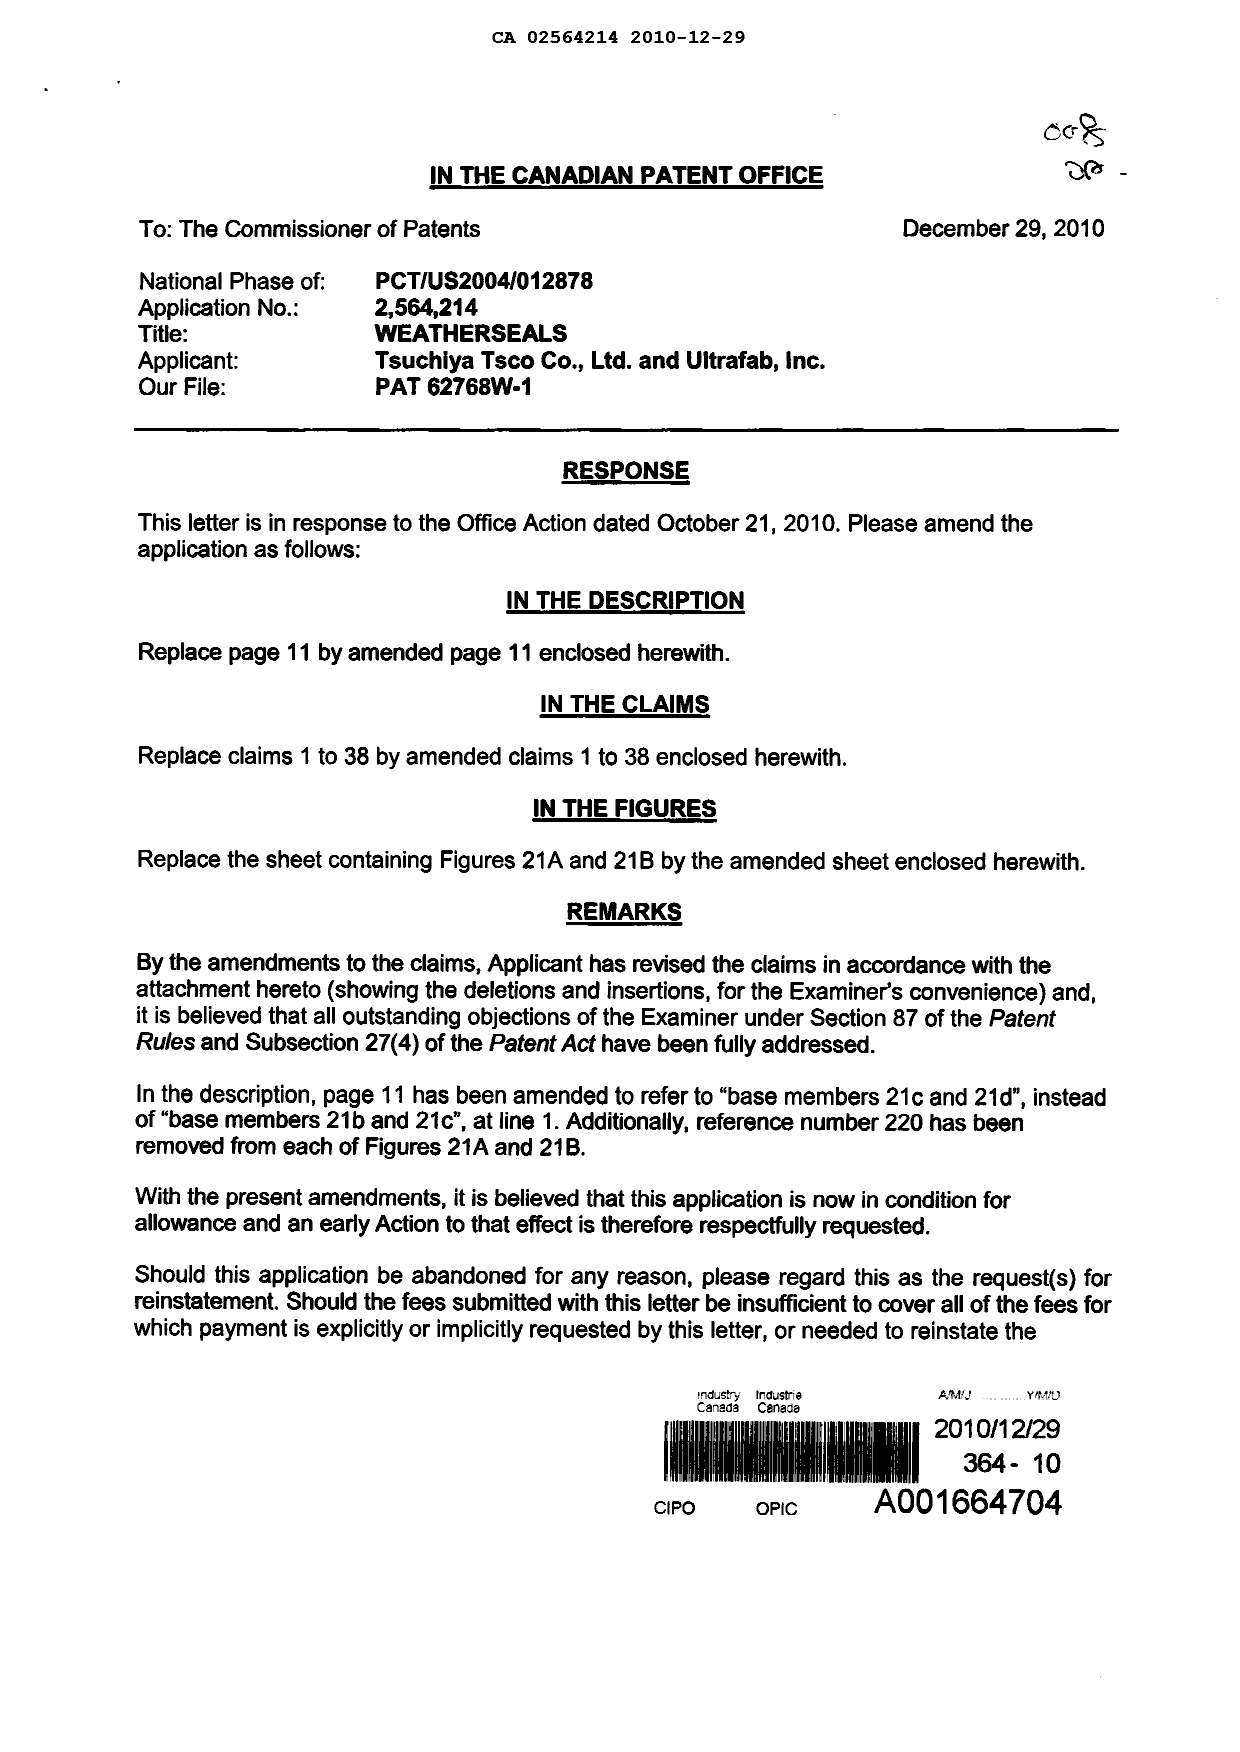 Canadian Patent Document 2564214. Prosecution-Amendment 20101229. Image 1 of 12